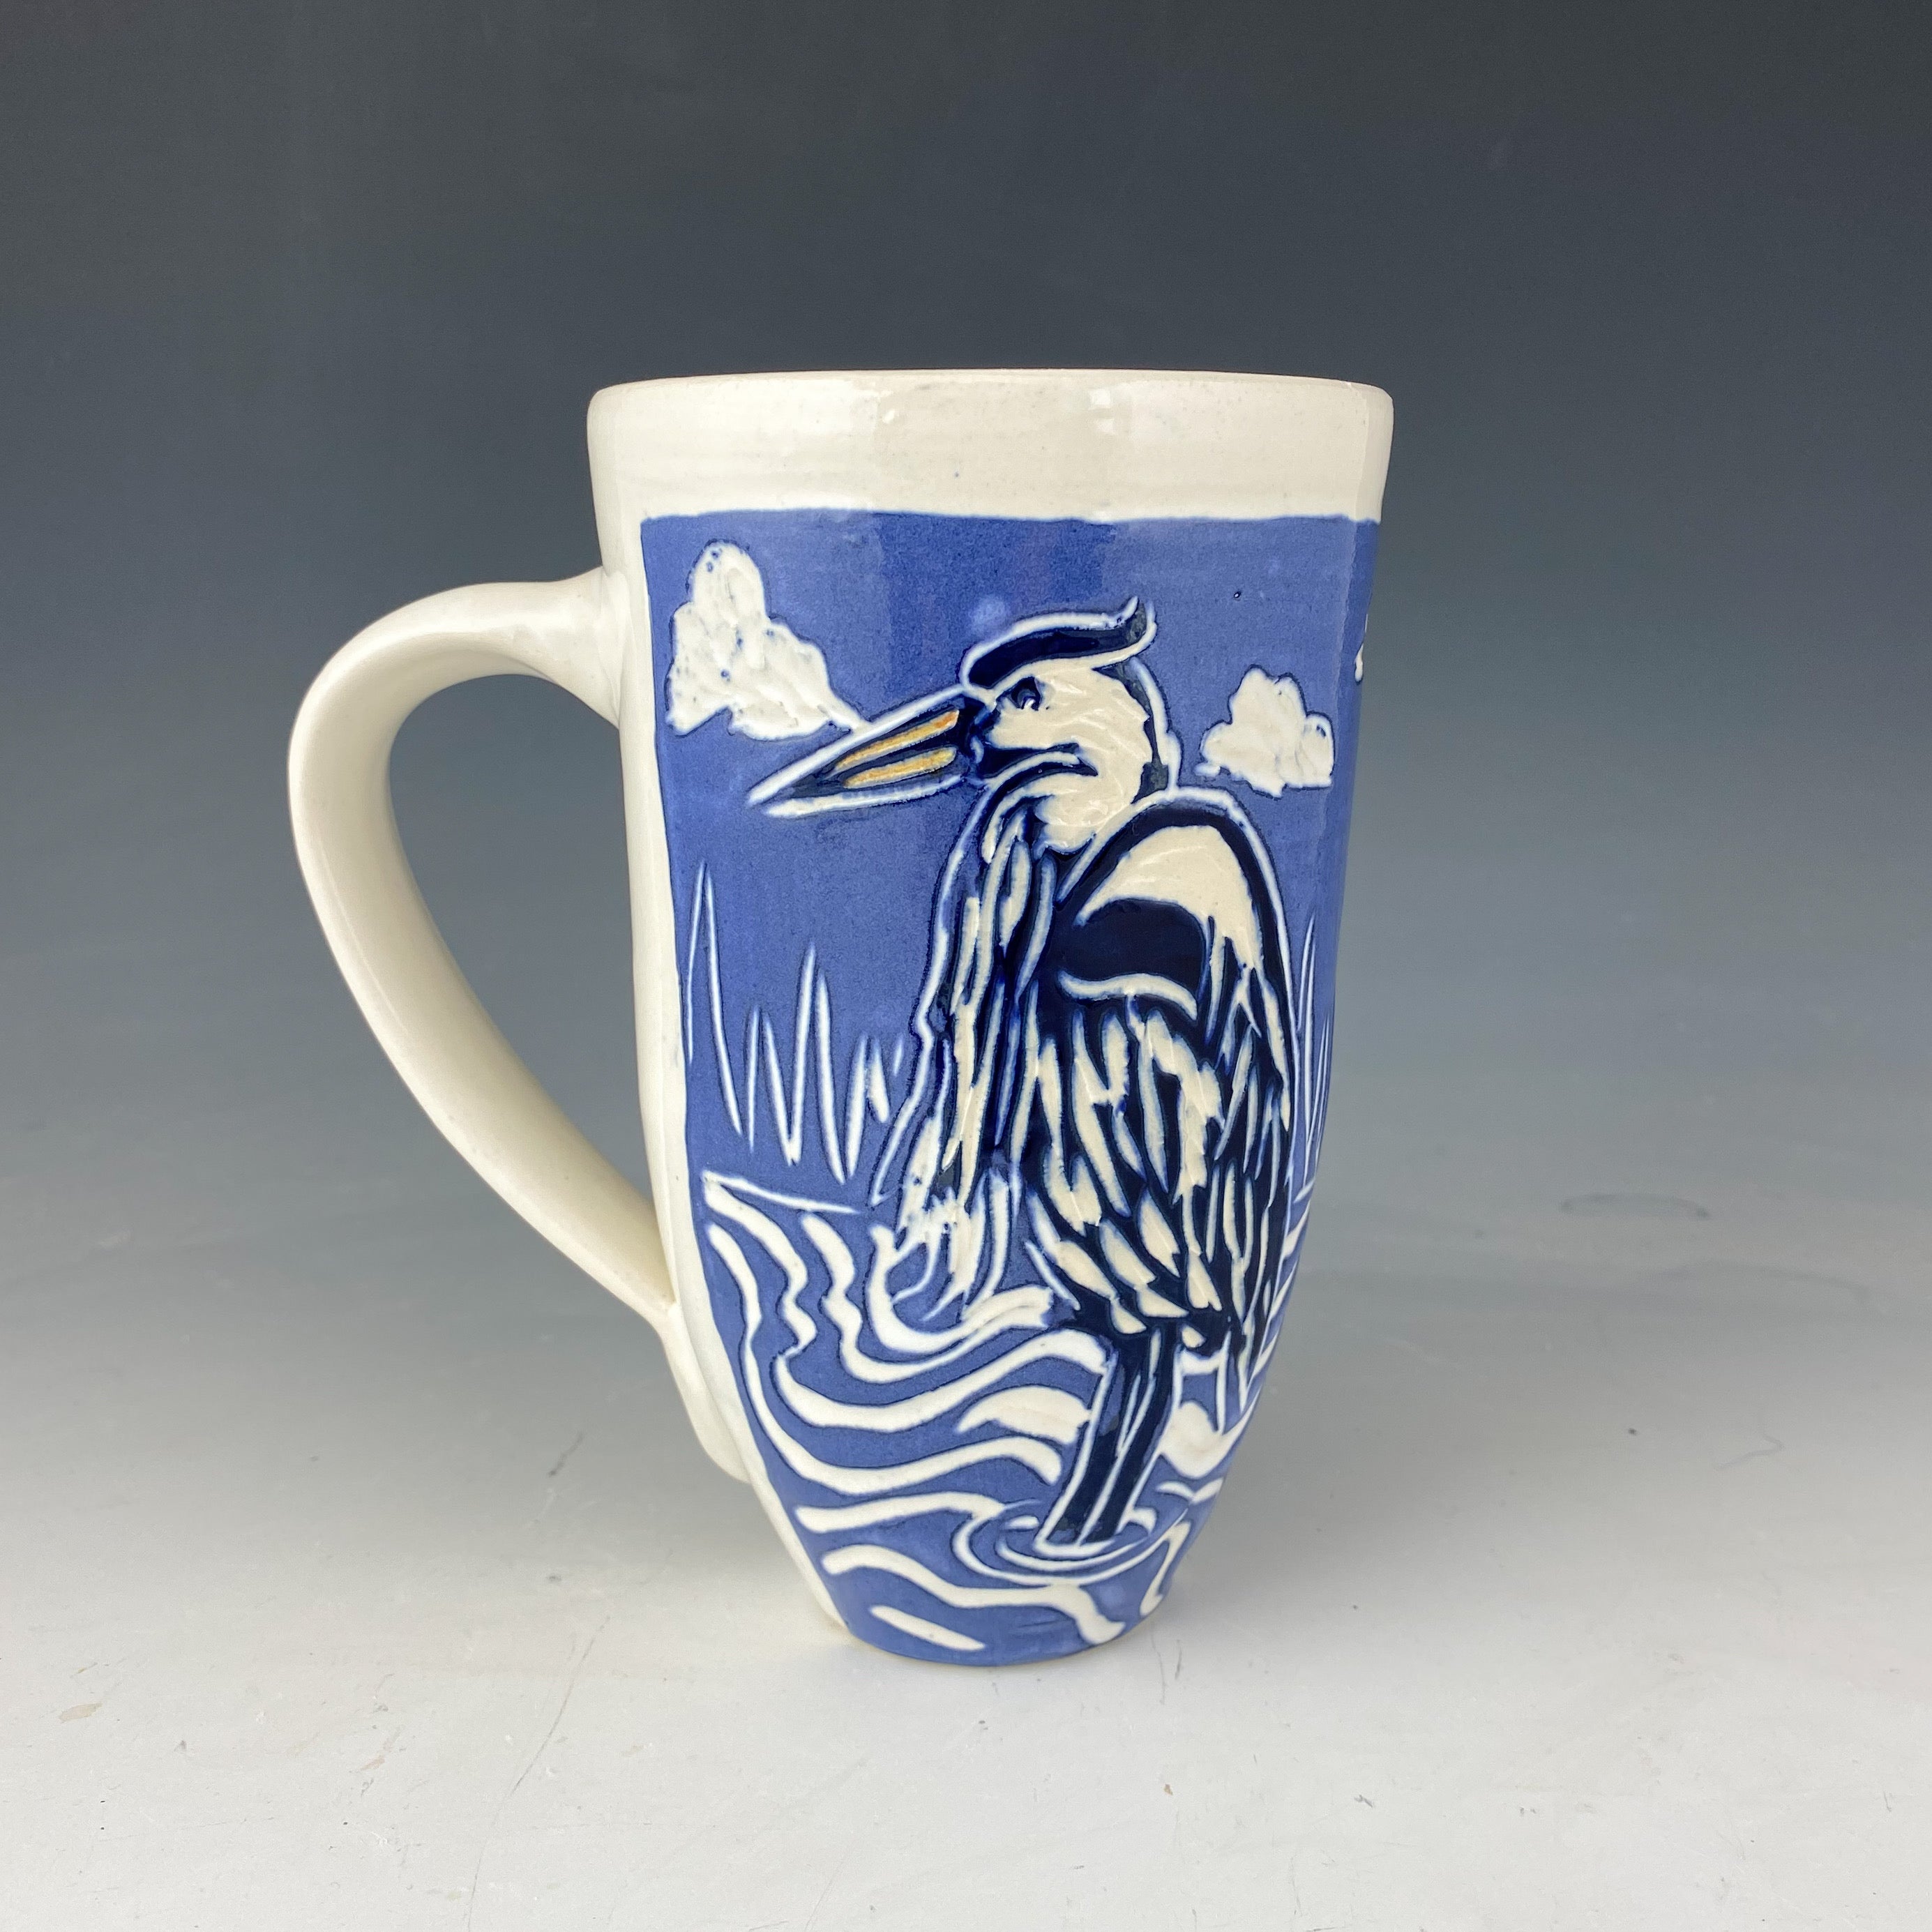 Heron Mug Tall in Blue and White